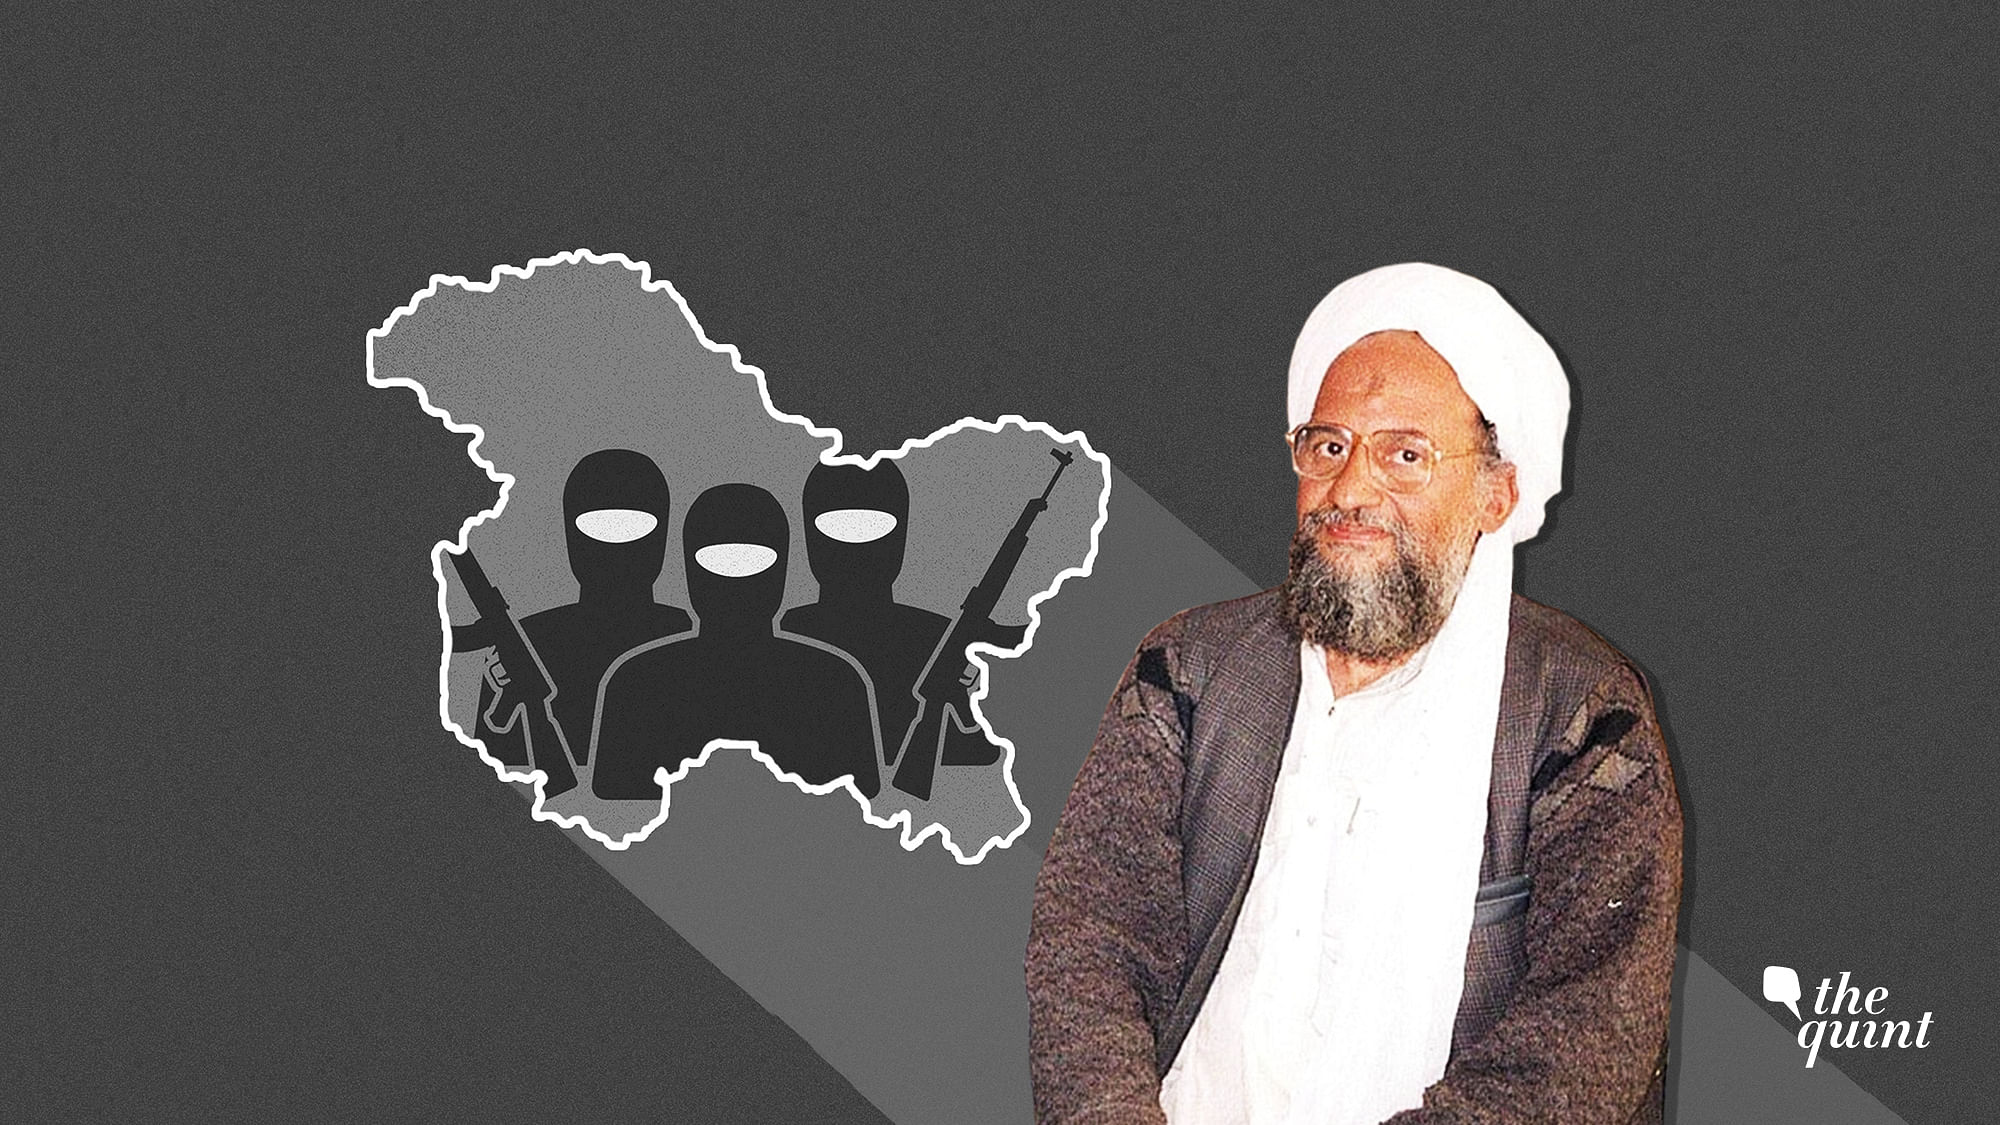 Image of Kashmir map with illustration, and image of Al Qaeda chief Ayman al-Zawahiri, used for representation.